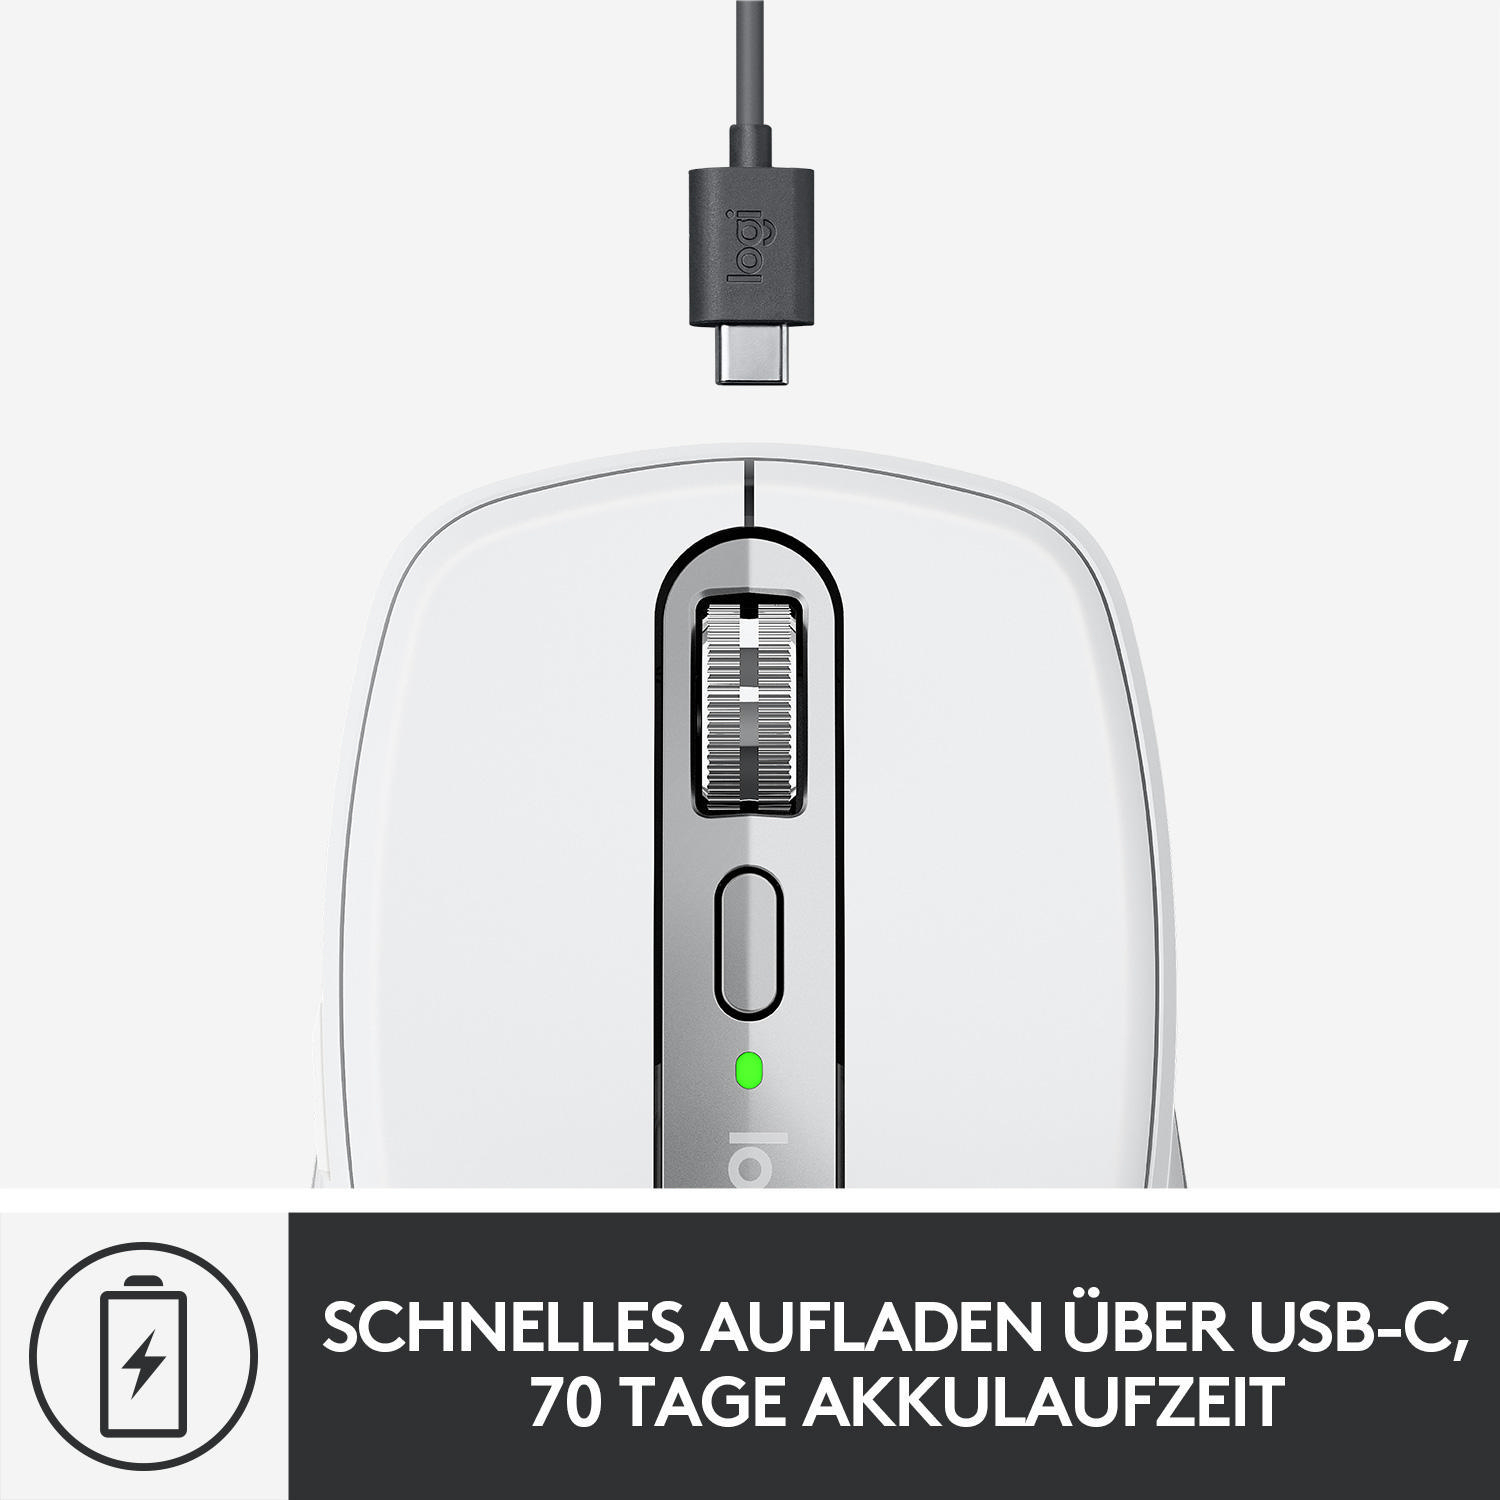 LOGITECH MX für Maus, kabellose kompakte Anywhere Mac Space 3 Grey